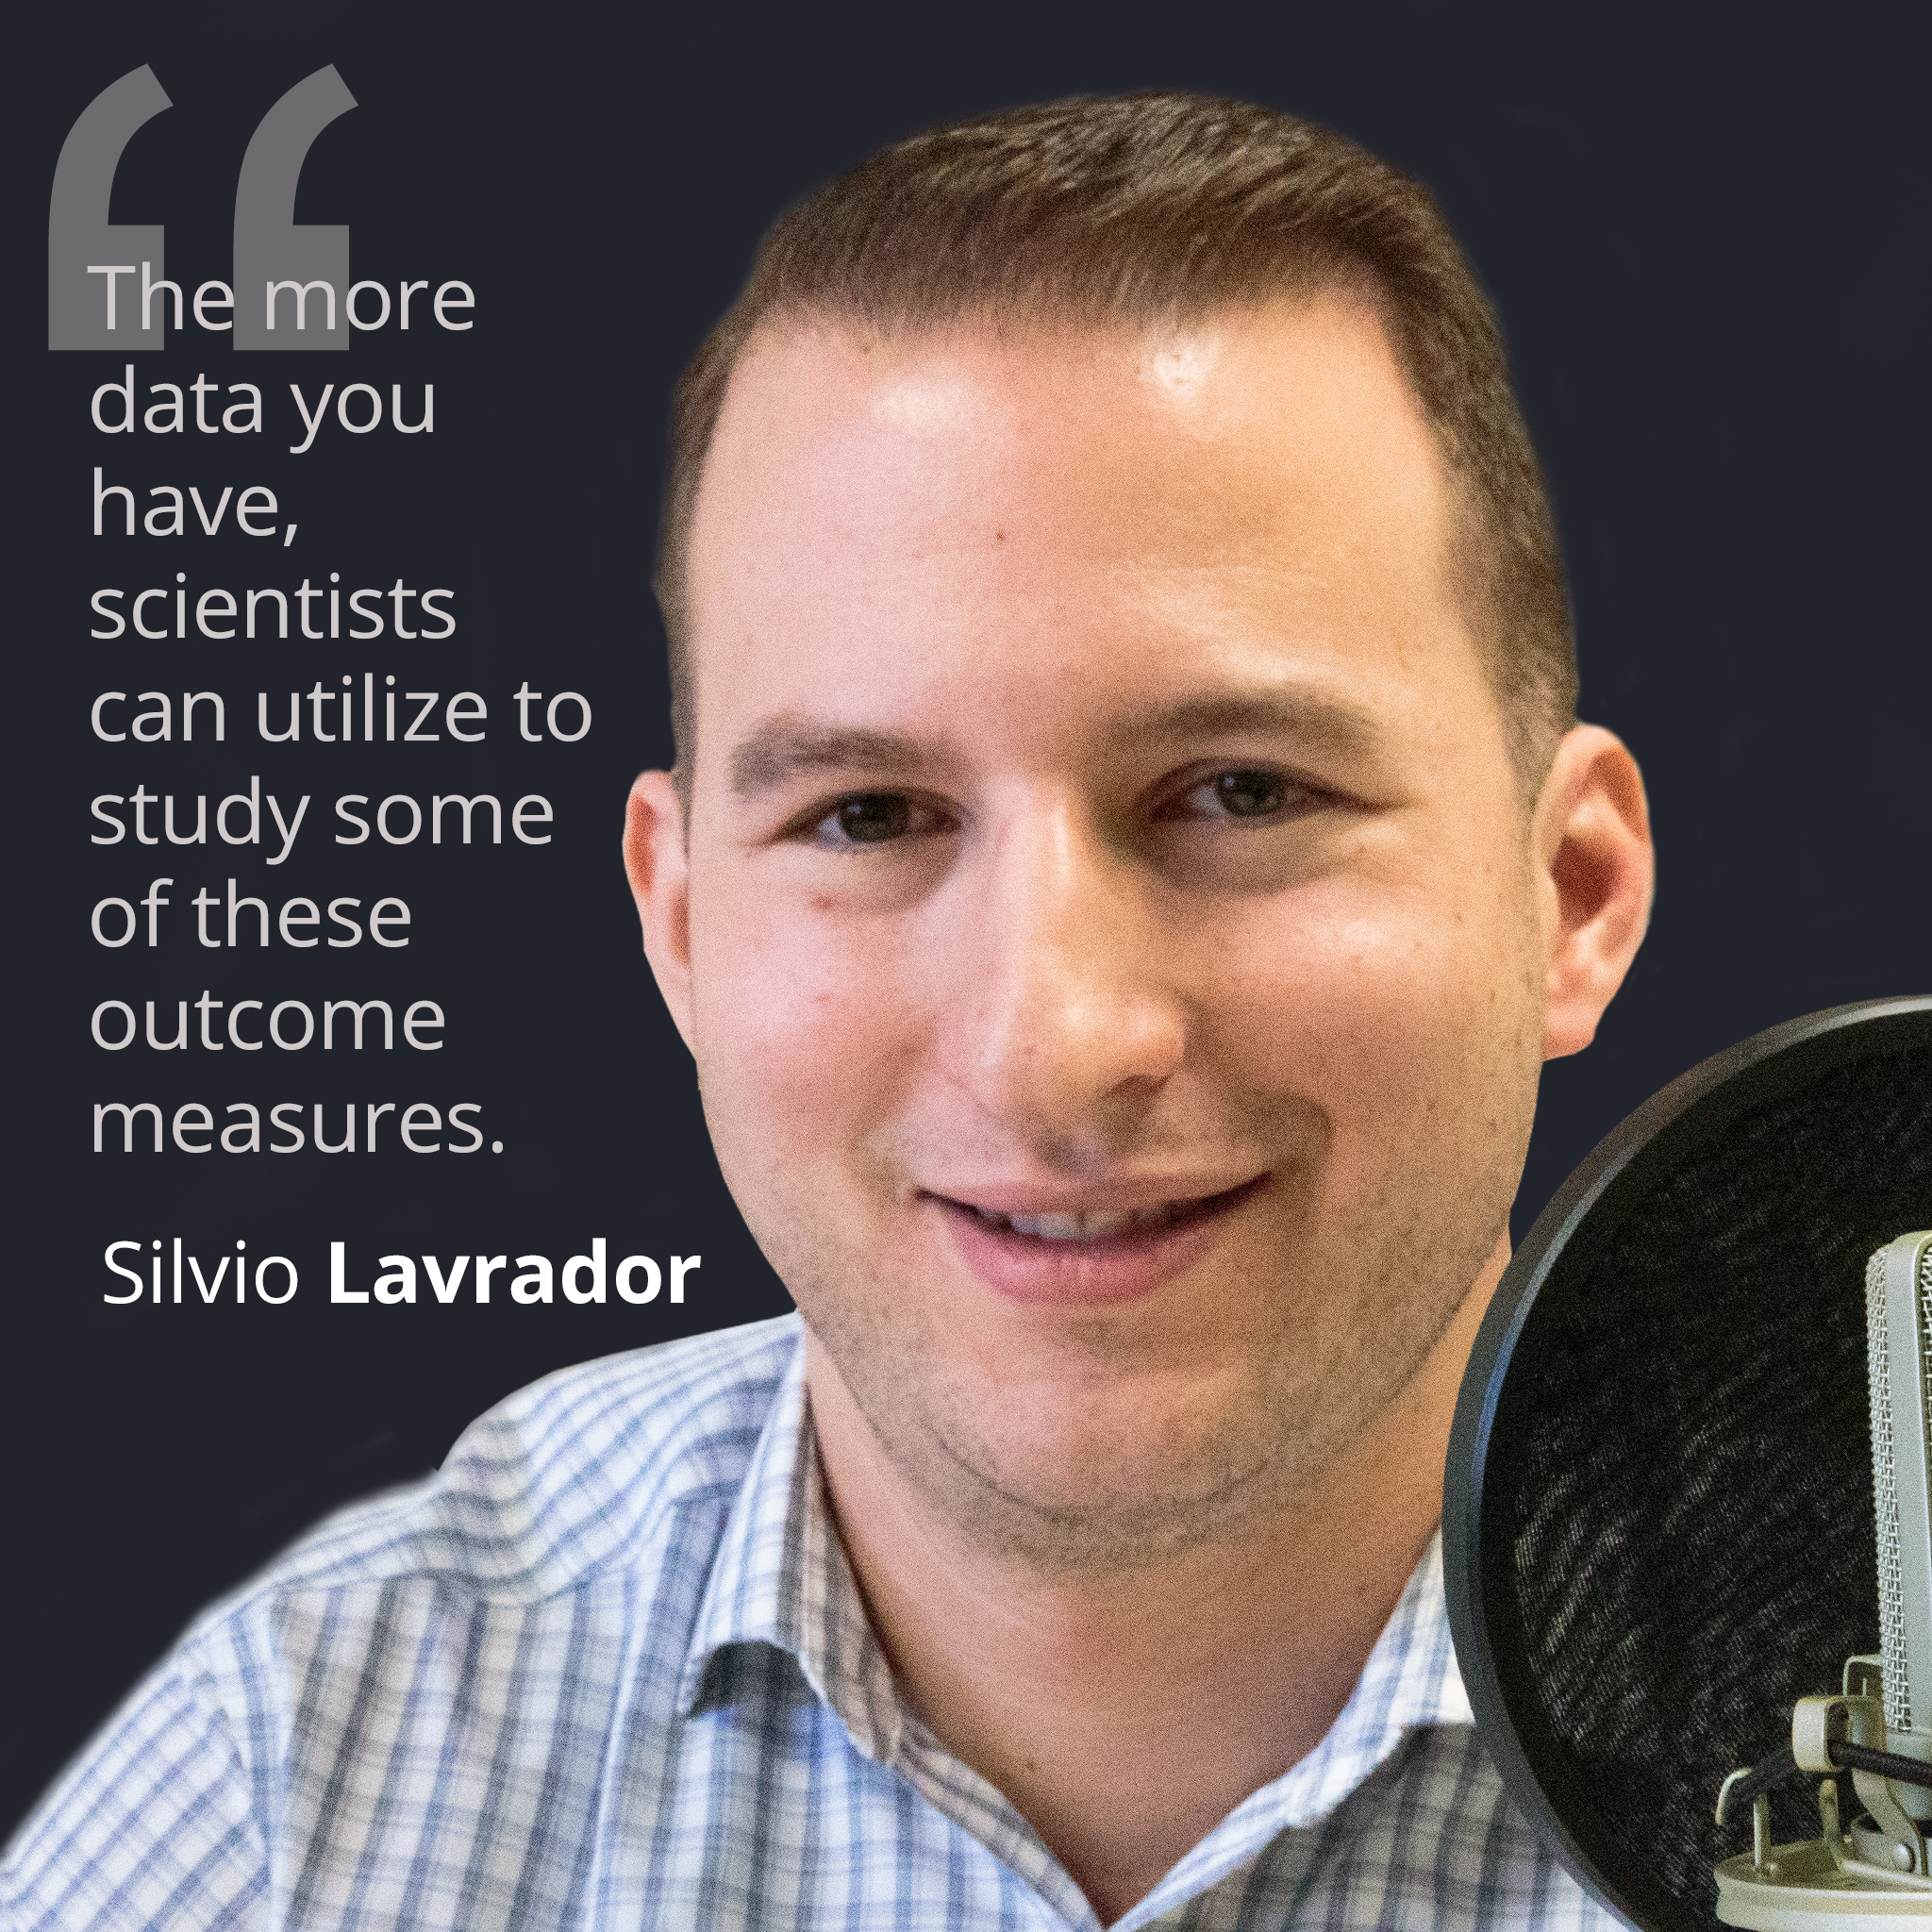 Silvio Lavrador quote and headshot